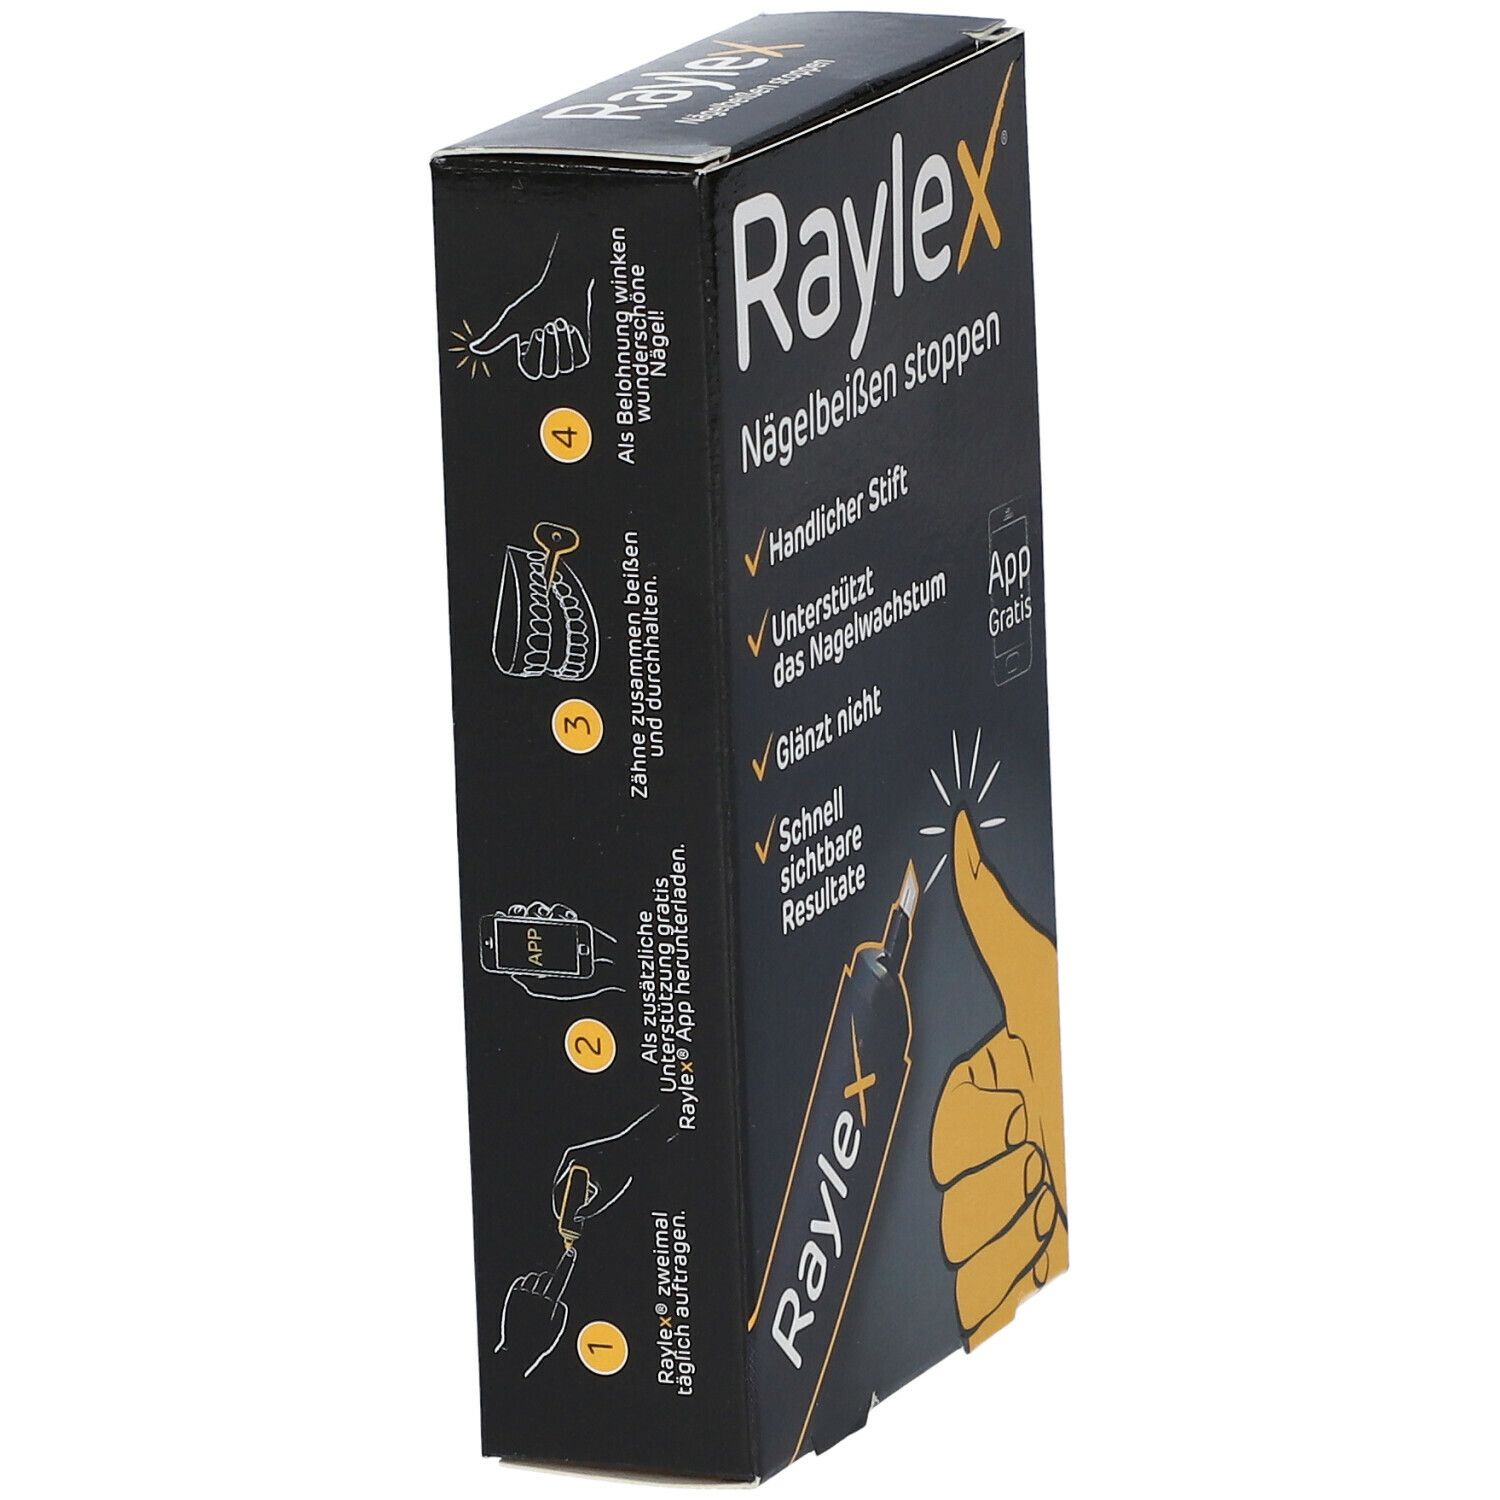 Raylex®